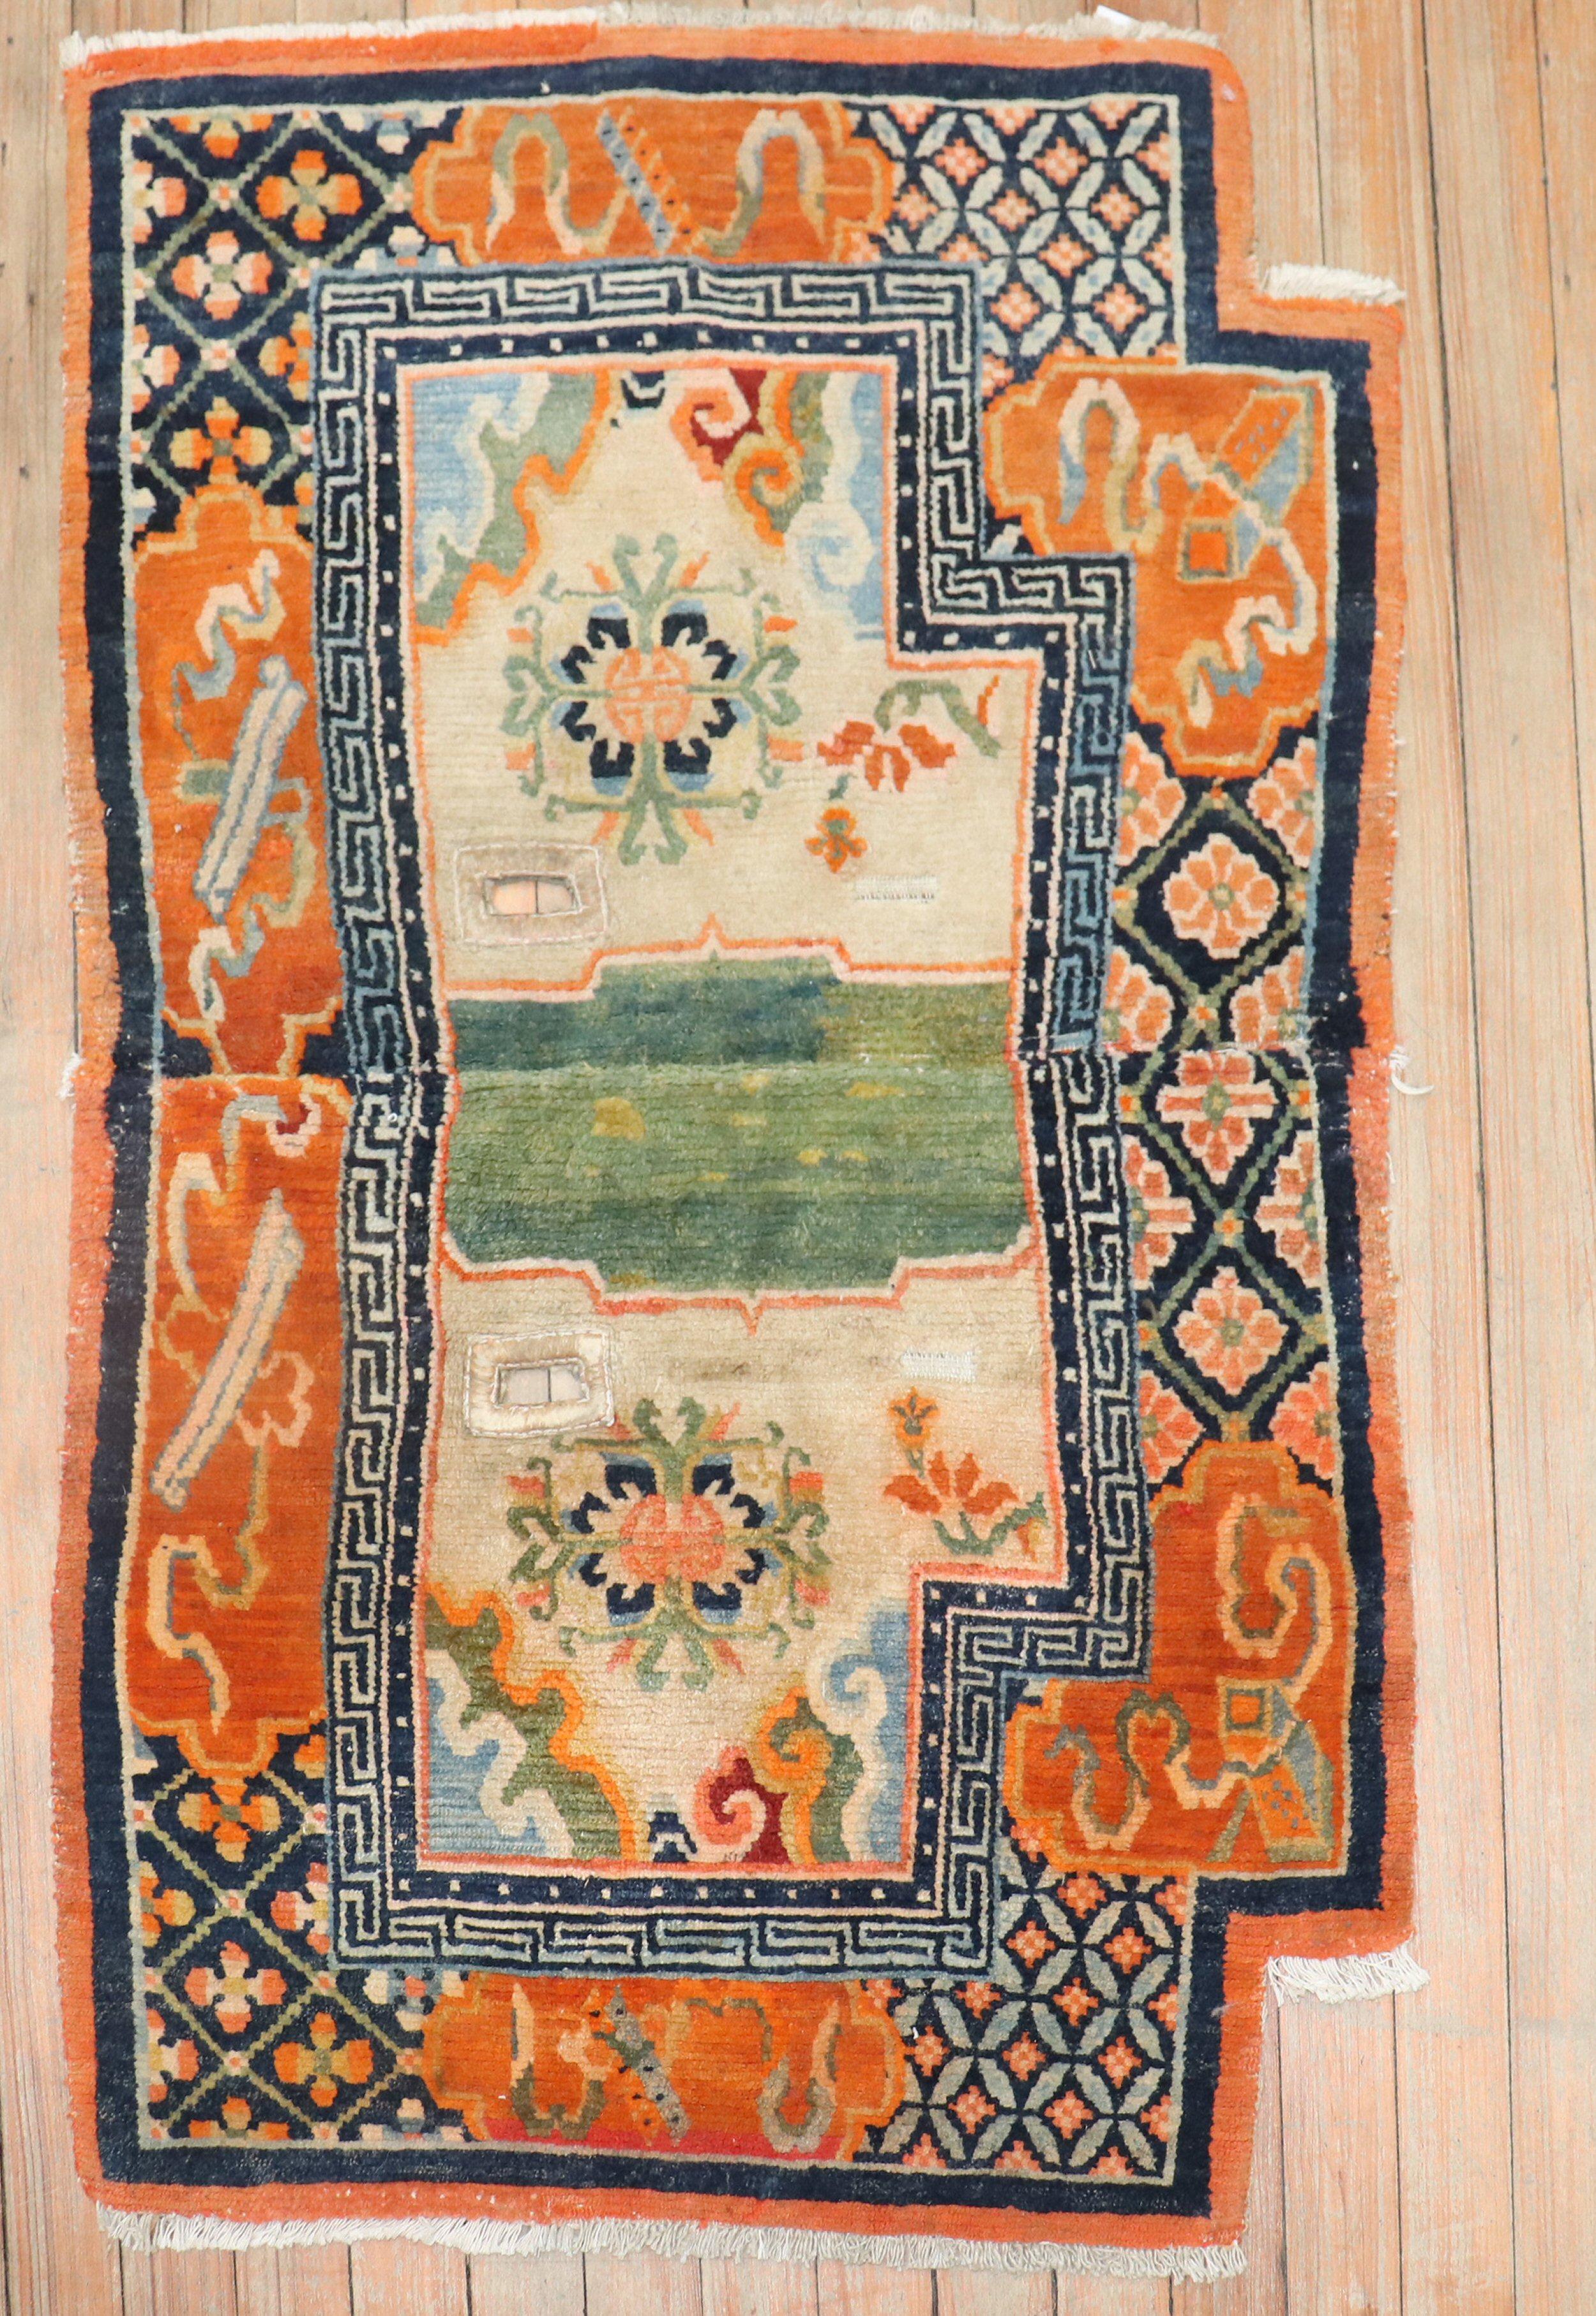 An early 20th century colorful Tibetan textile saddbleback rug.

Measures: 2'2'' x 3'5''.